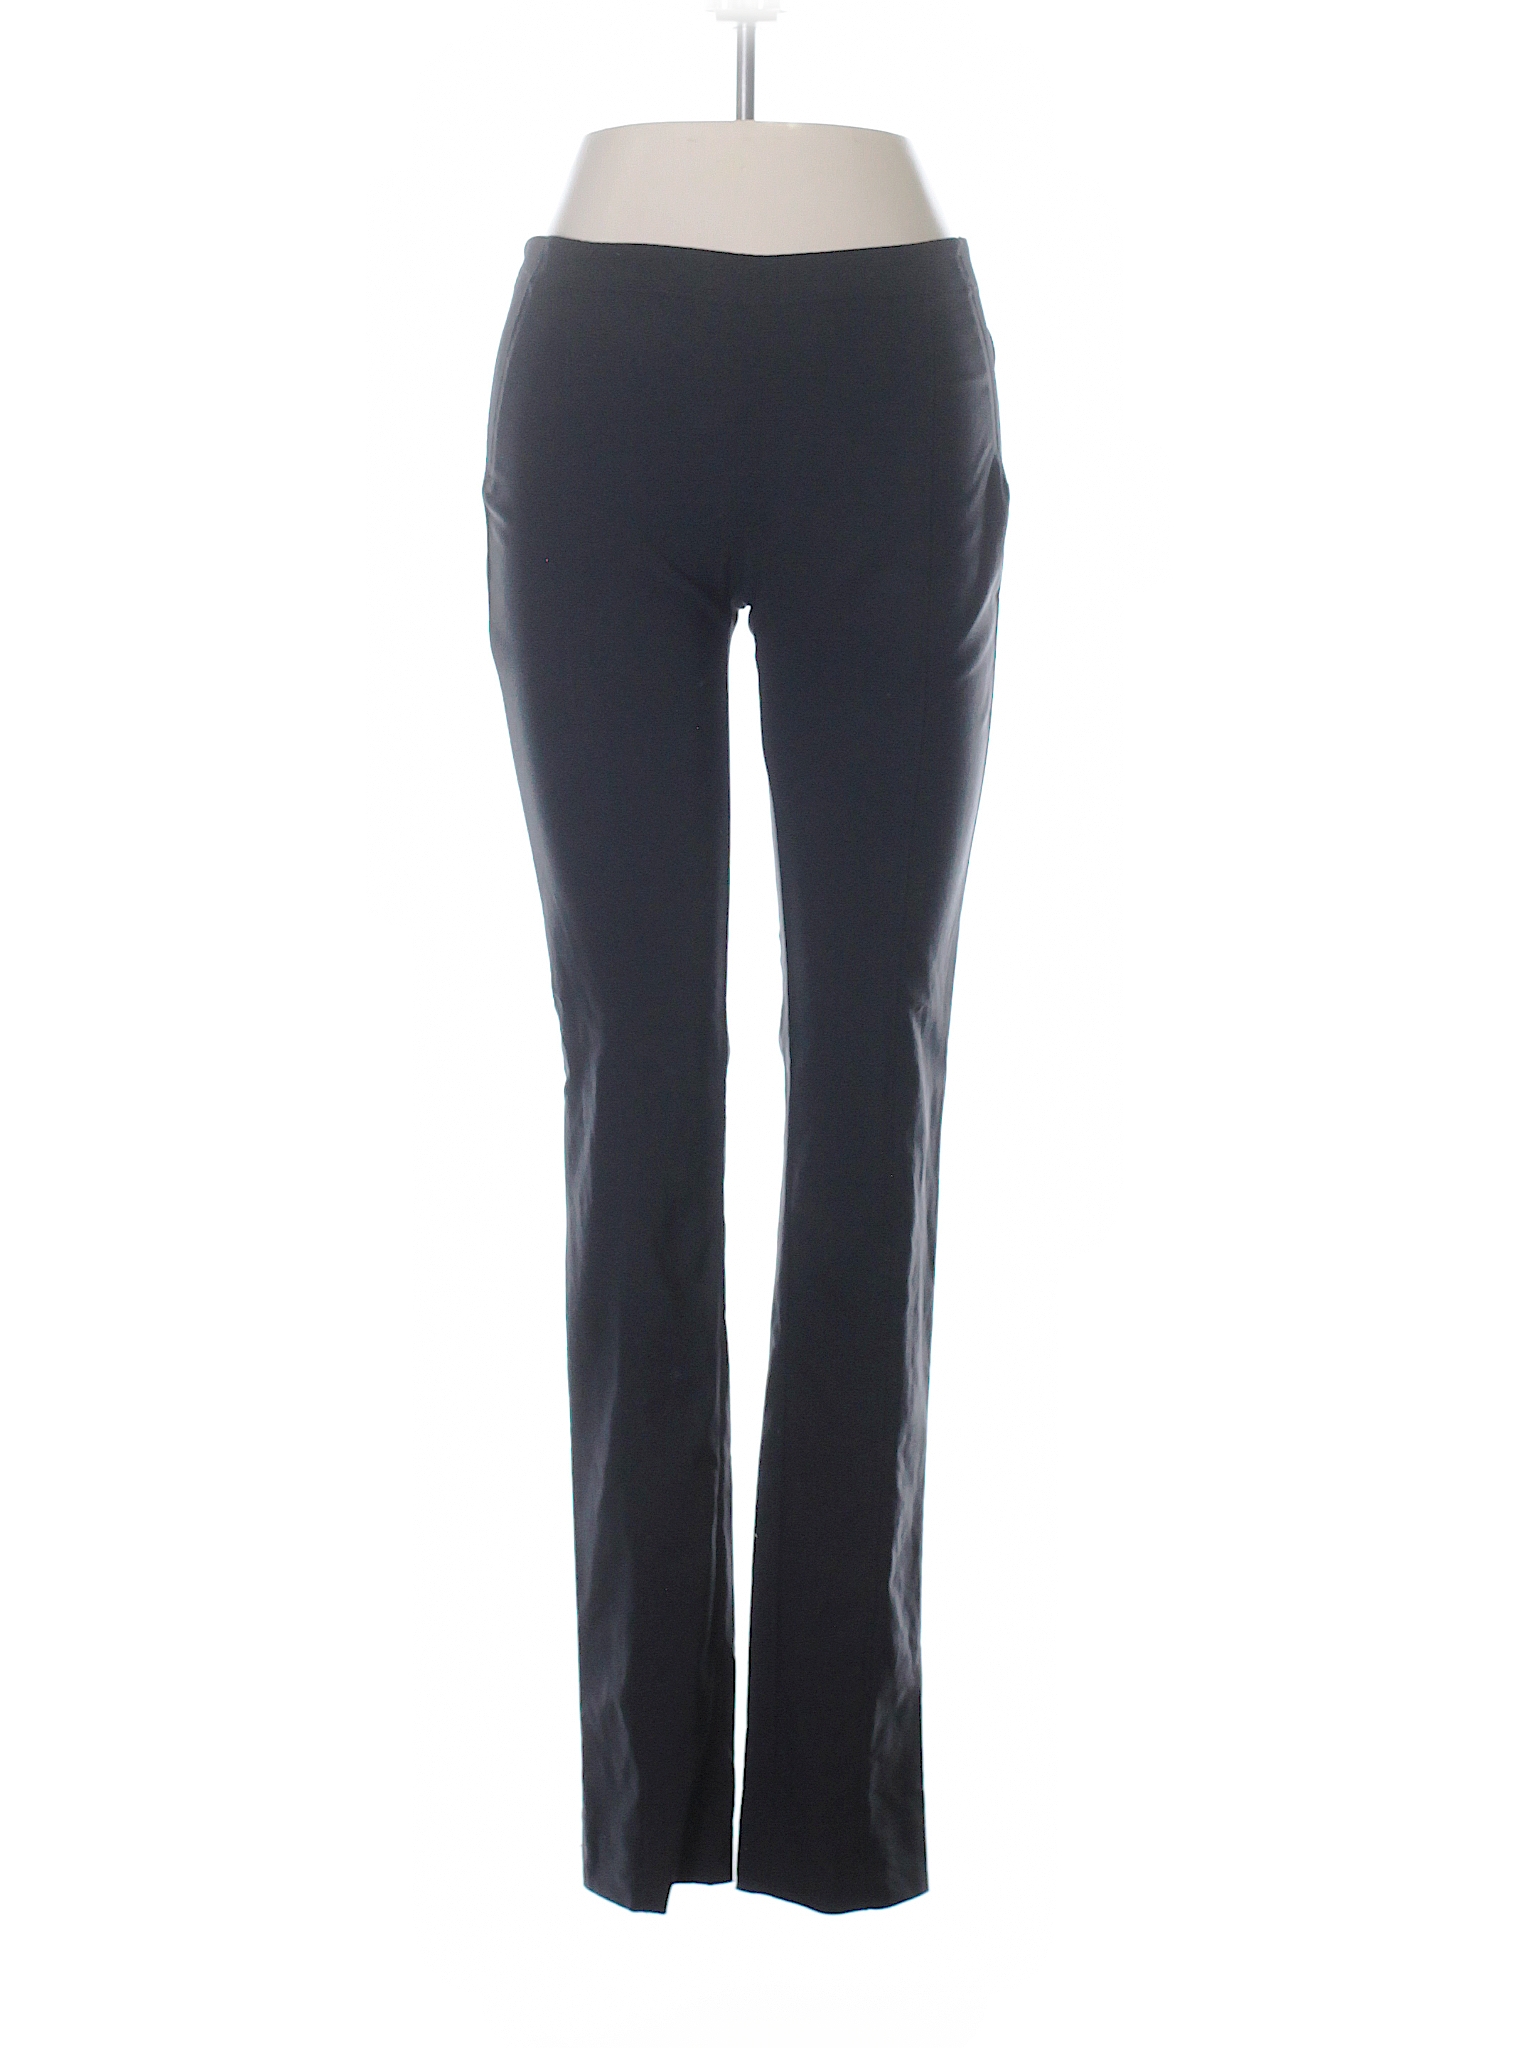 Simply Vera Vera Wang Solid Black Dress Pants Size XS - 71% off | thredUP